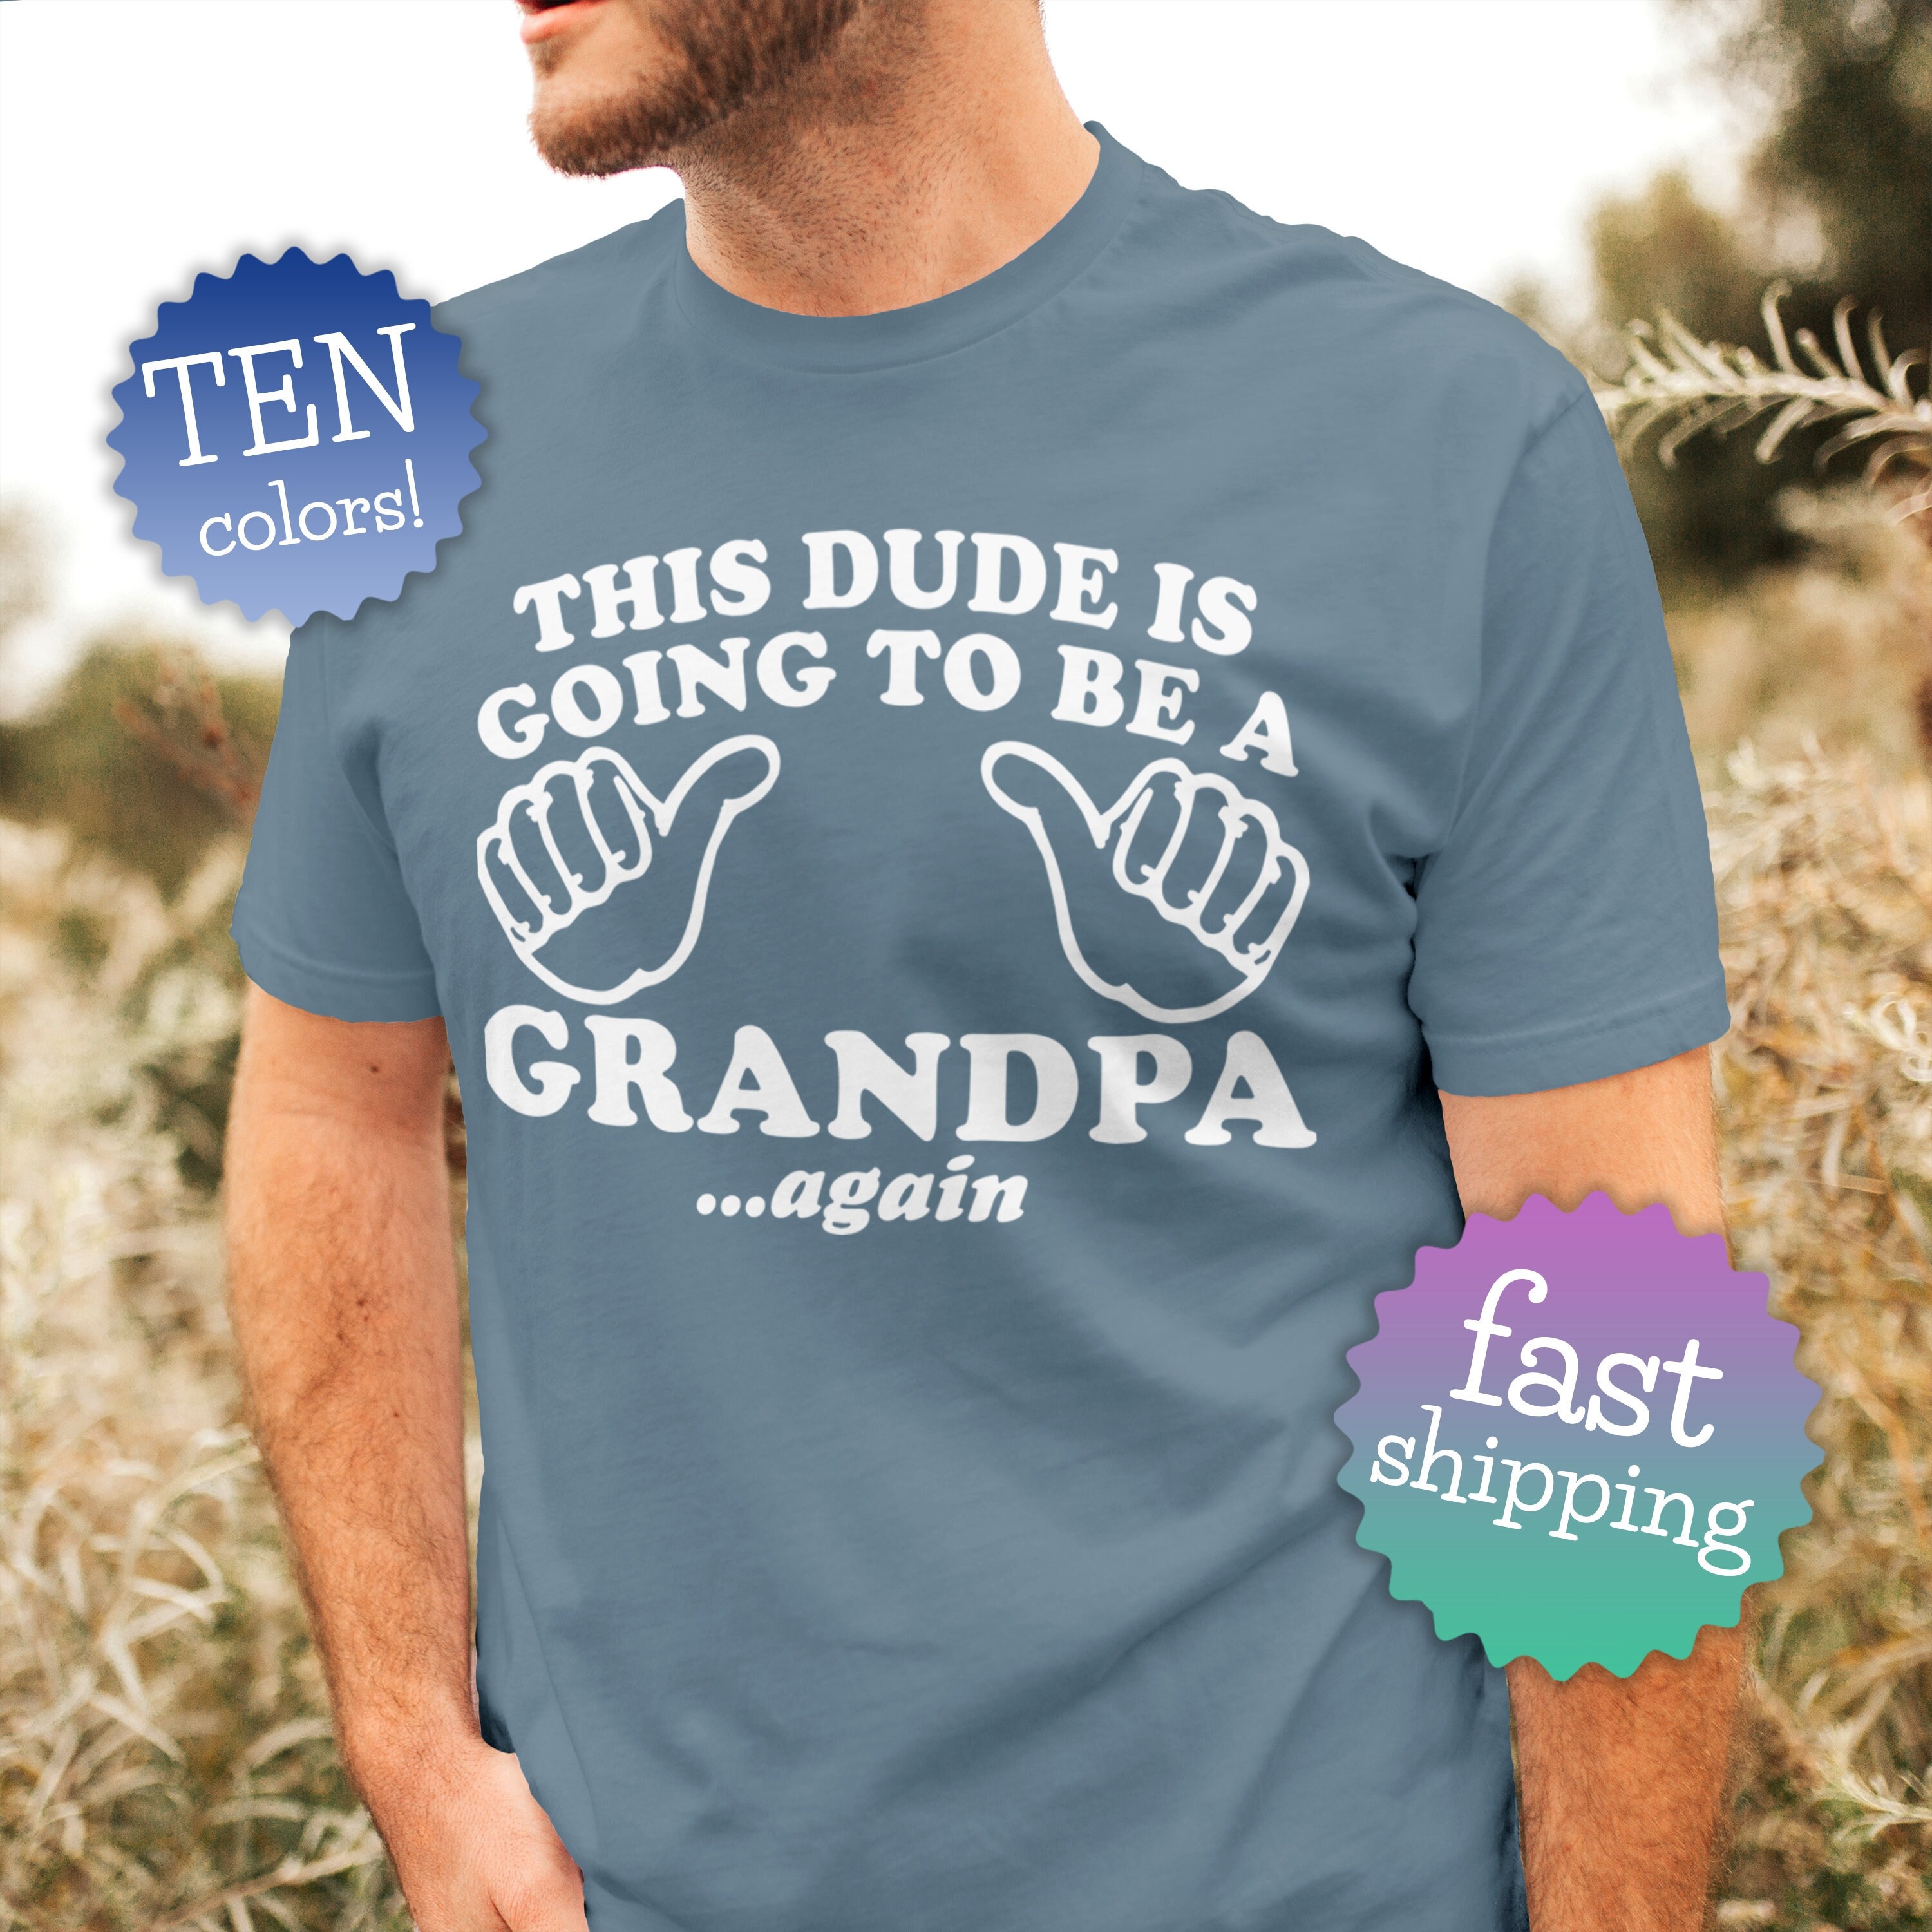 T-Shirt for grandpa.